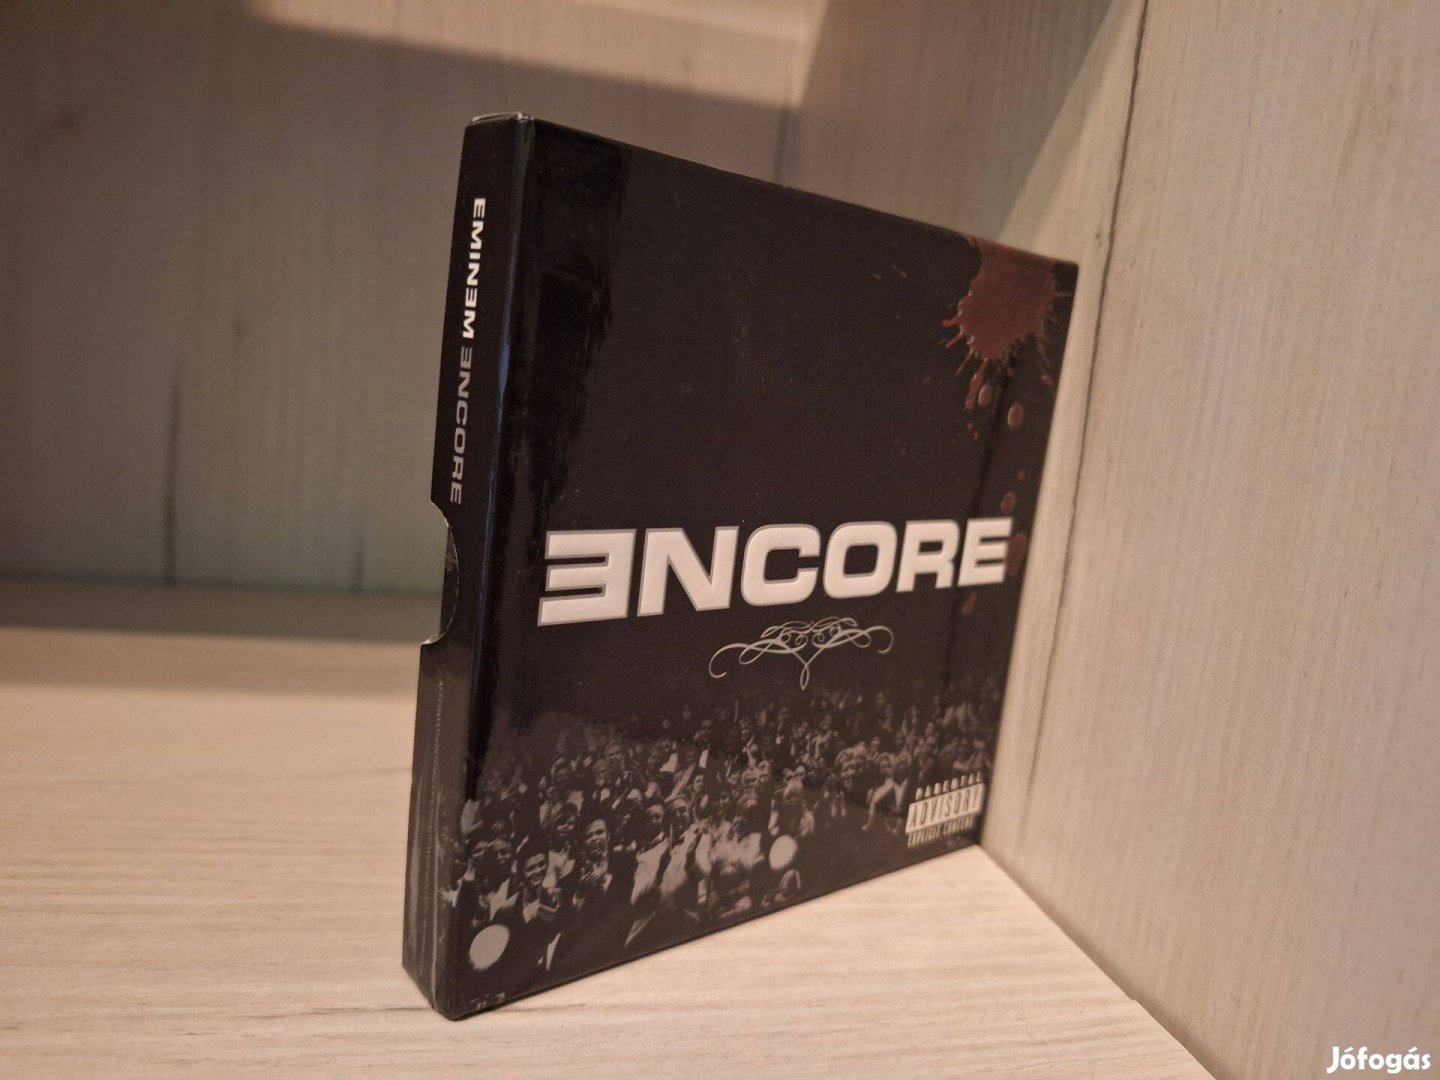 Eminem - Encore CD - Box Set, Shady Collector's Edition